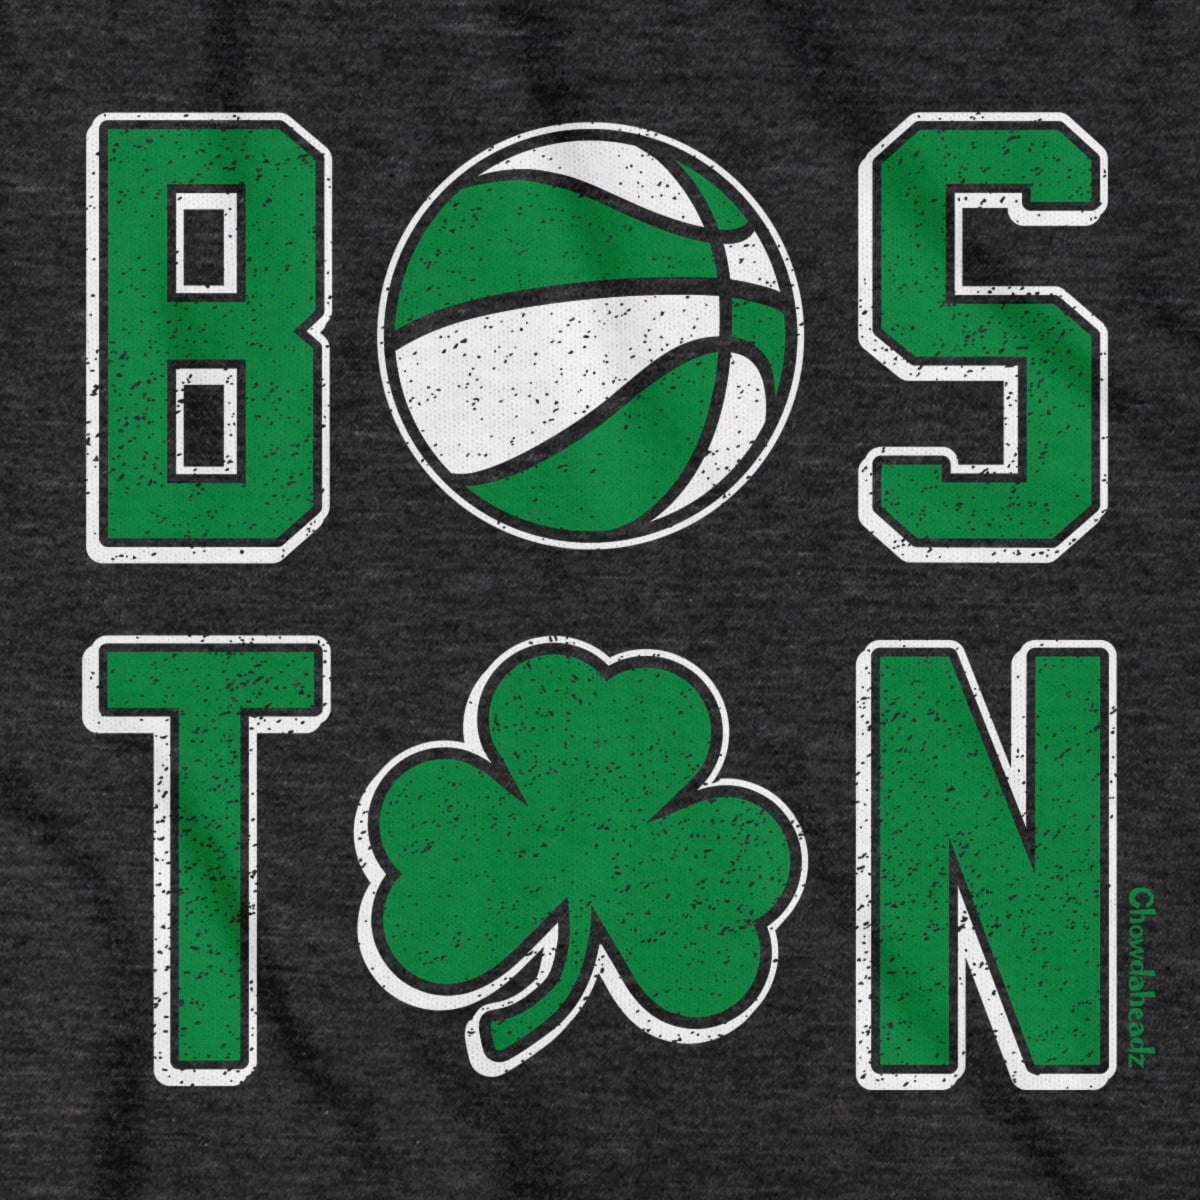 Boston Basketball Stacked T-Shirt - Chowdaheadz